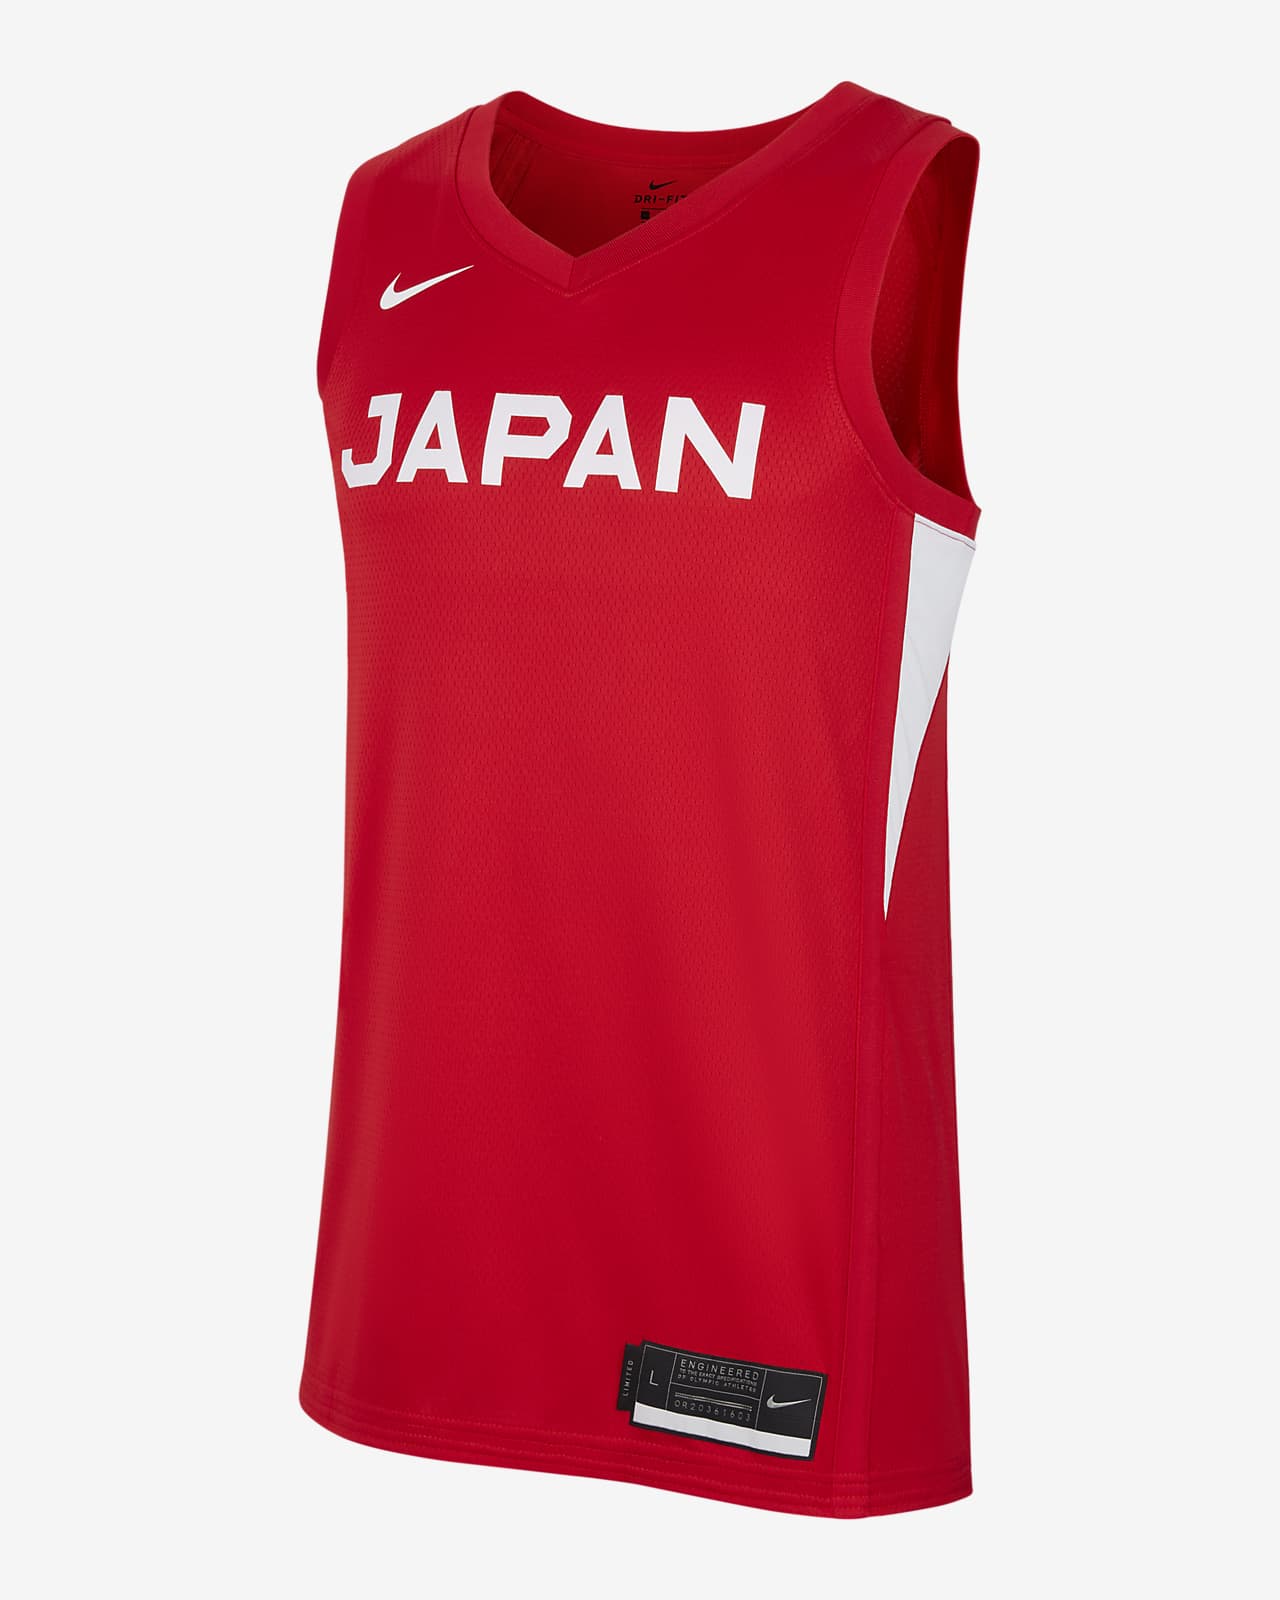 Japan (Road) Limited Men's Nike Basketball Jersey